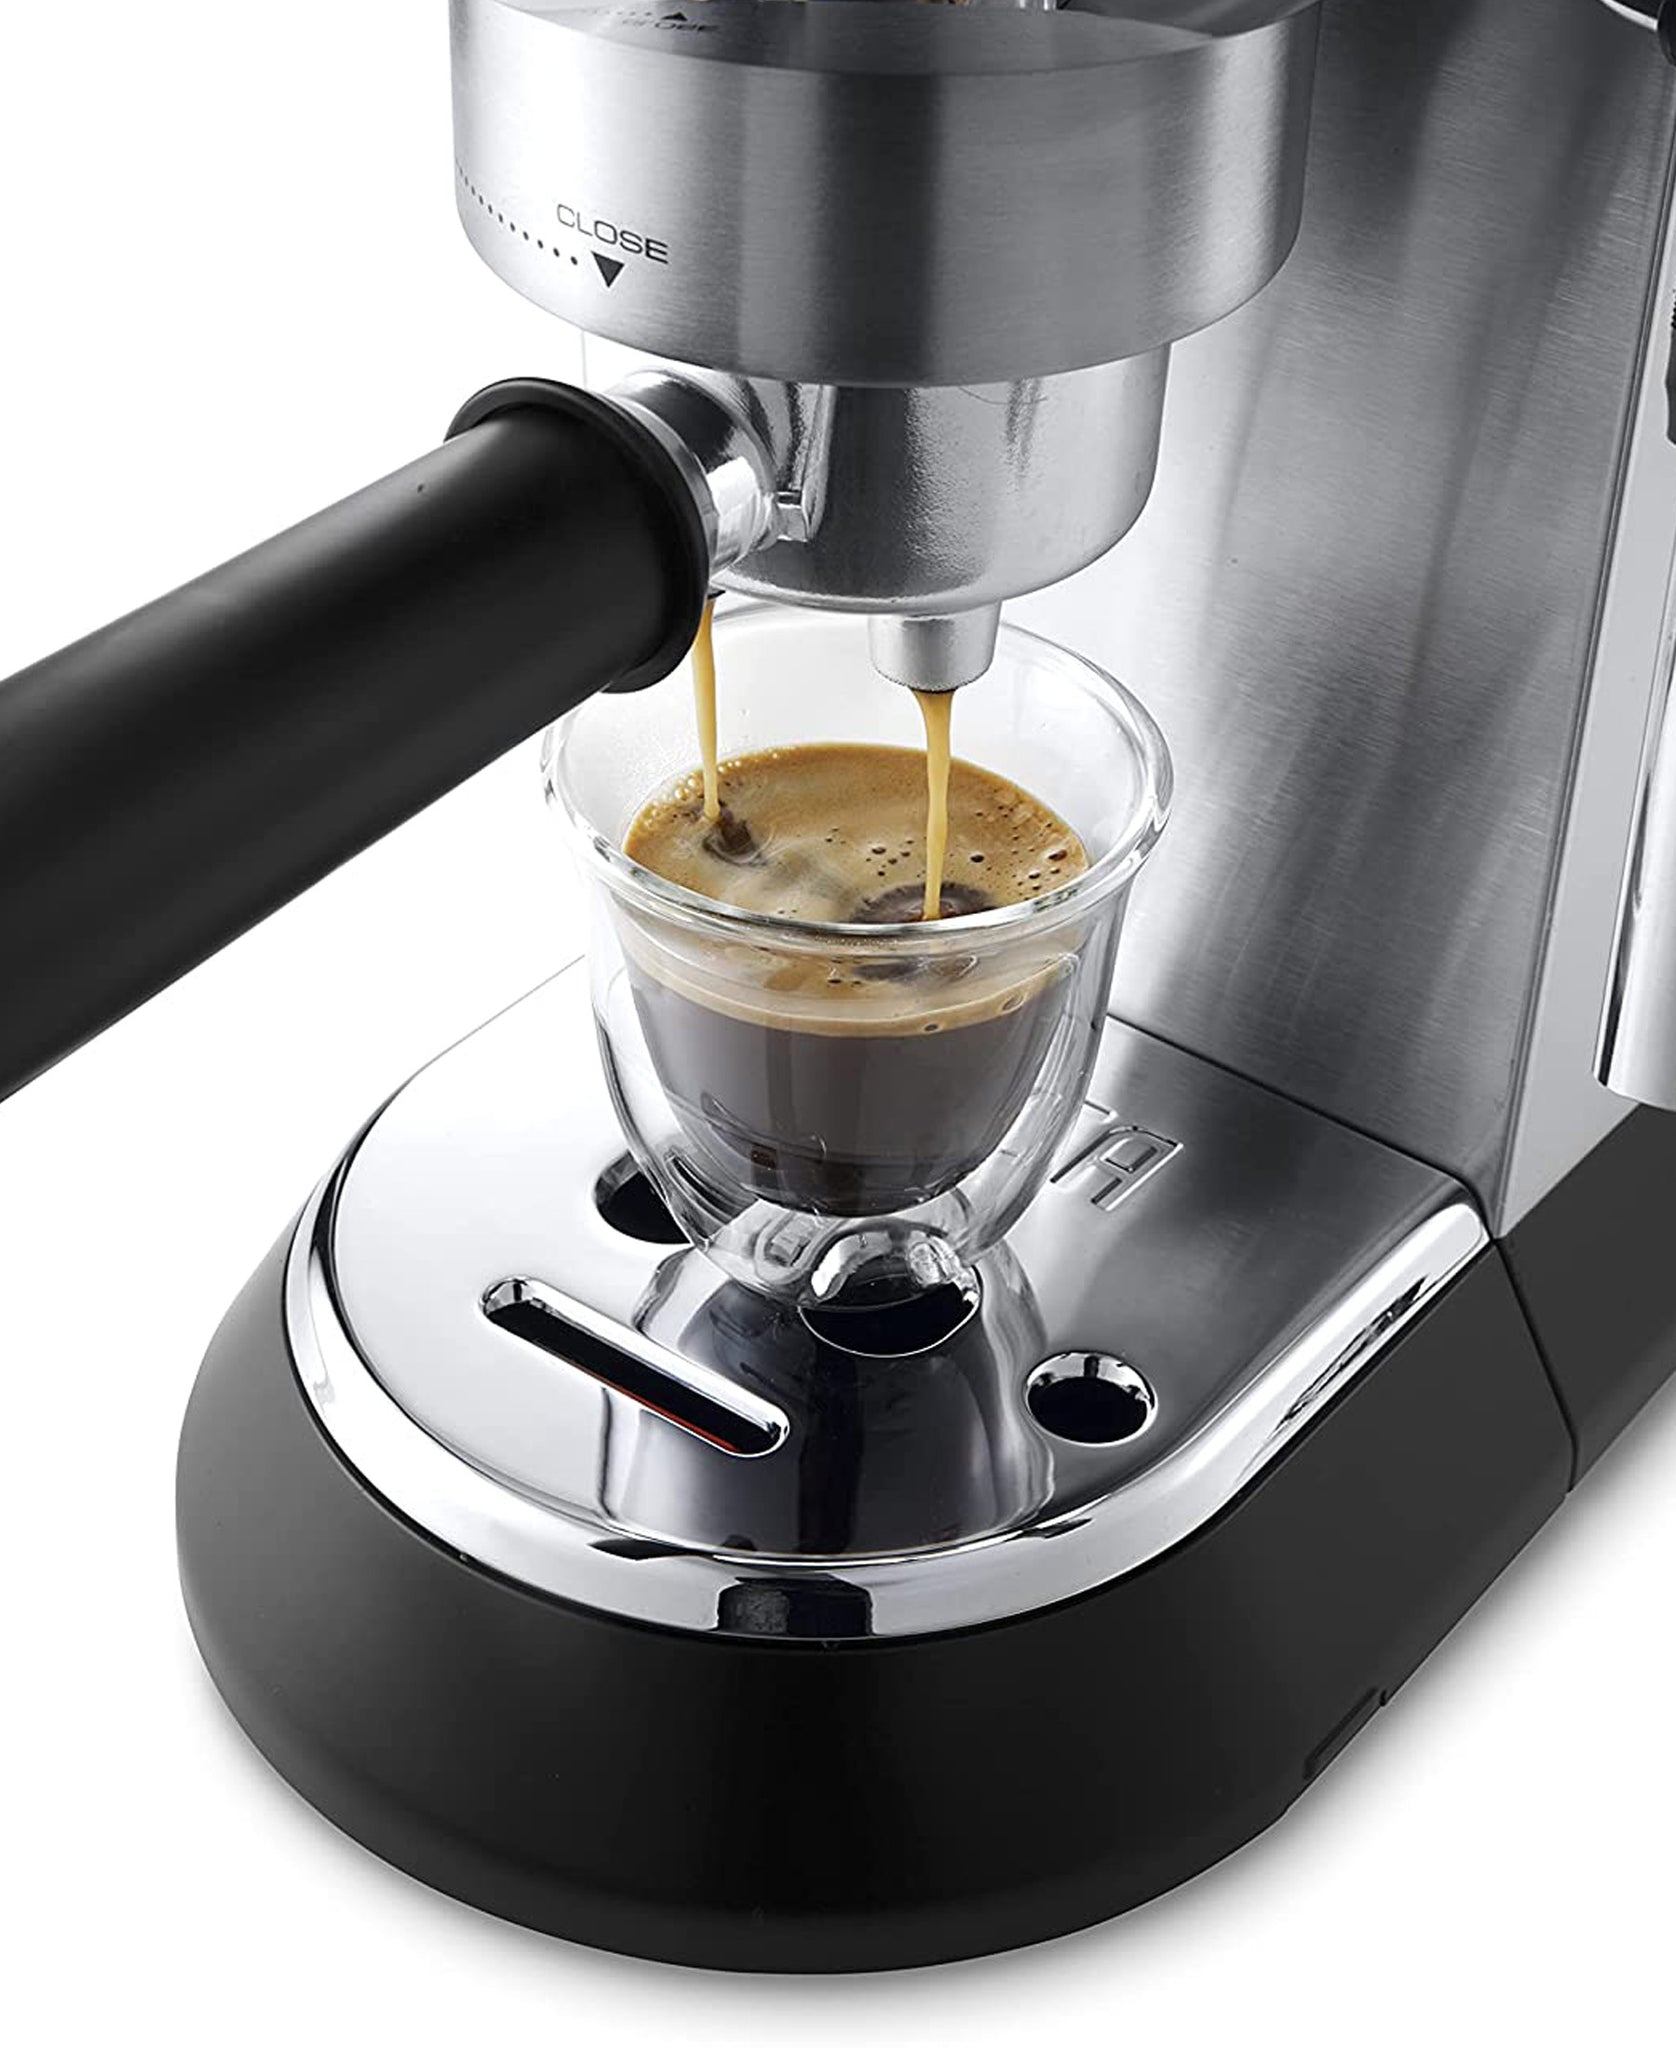 DeLonghi Dedica Pump Manual Espresso Coffee Machine - Metallic